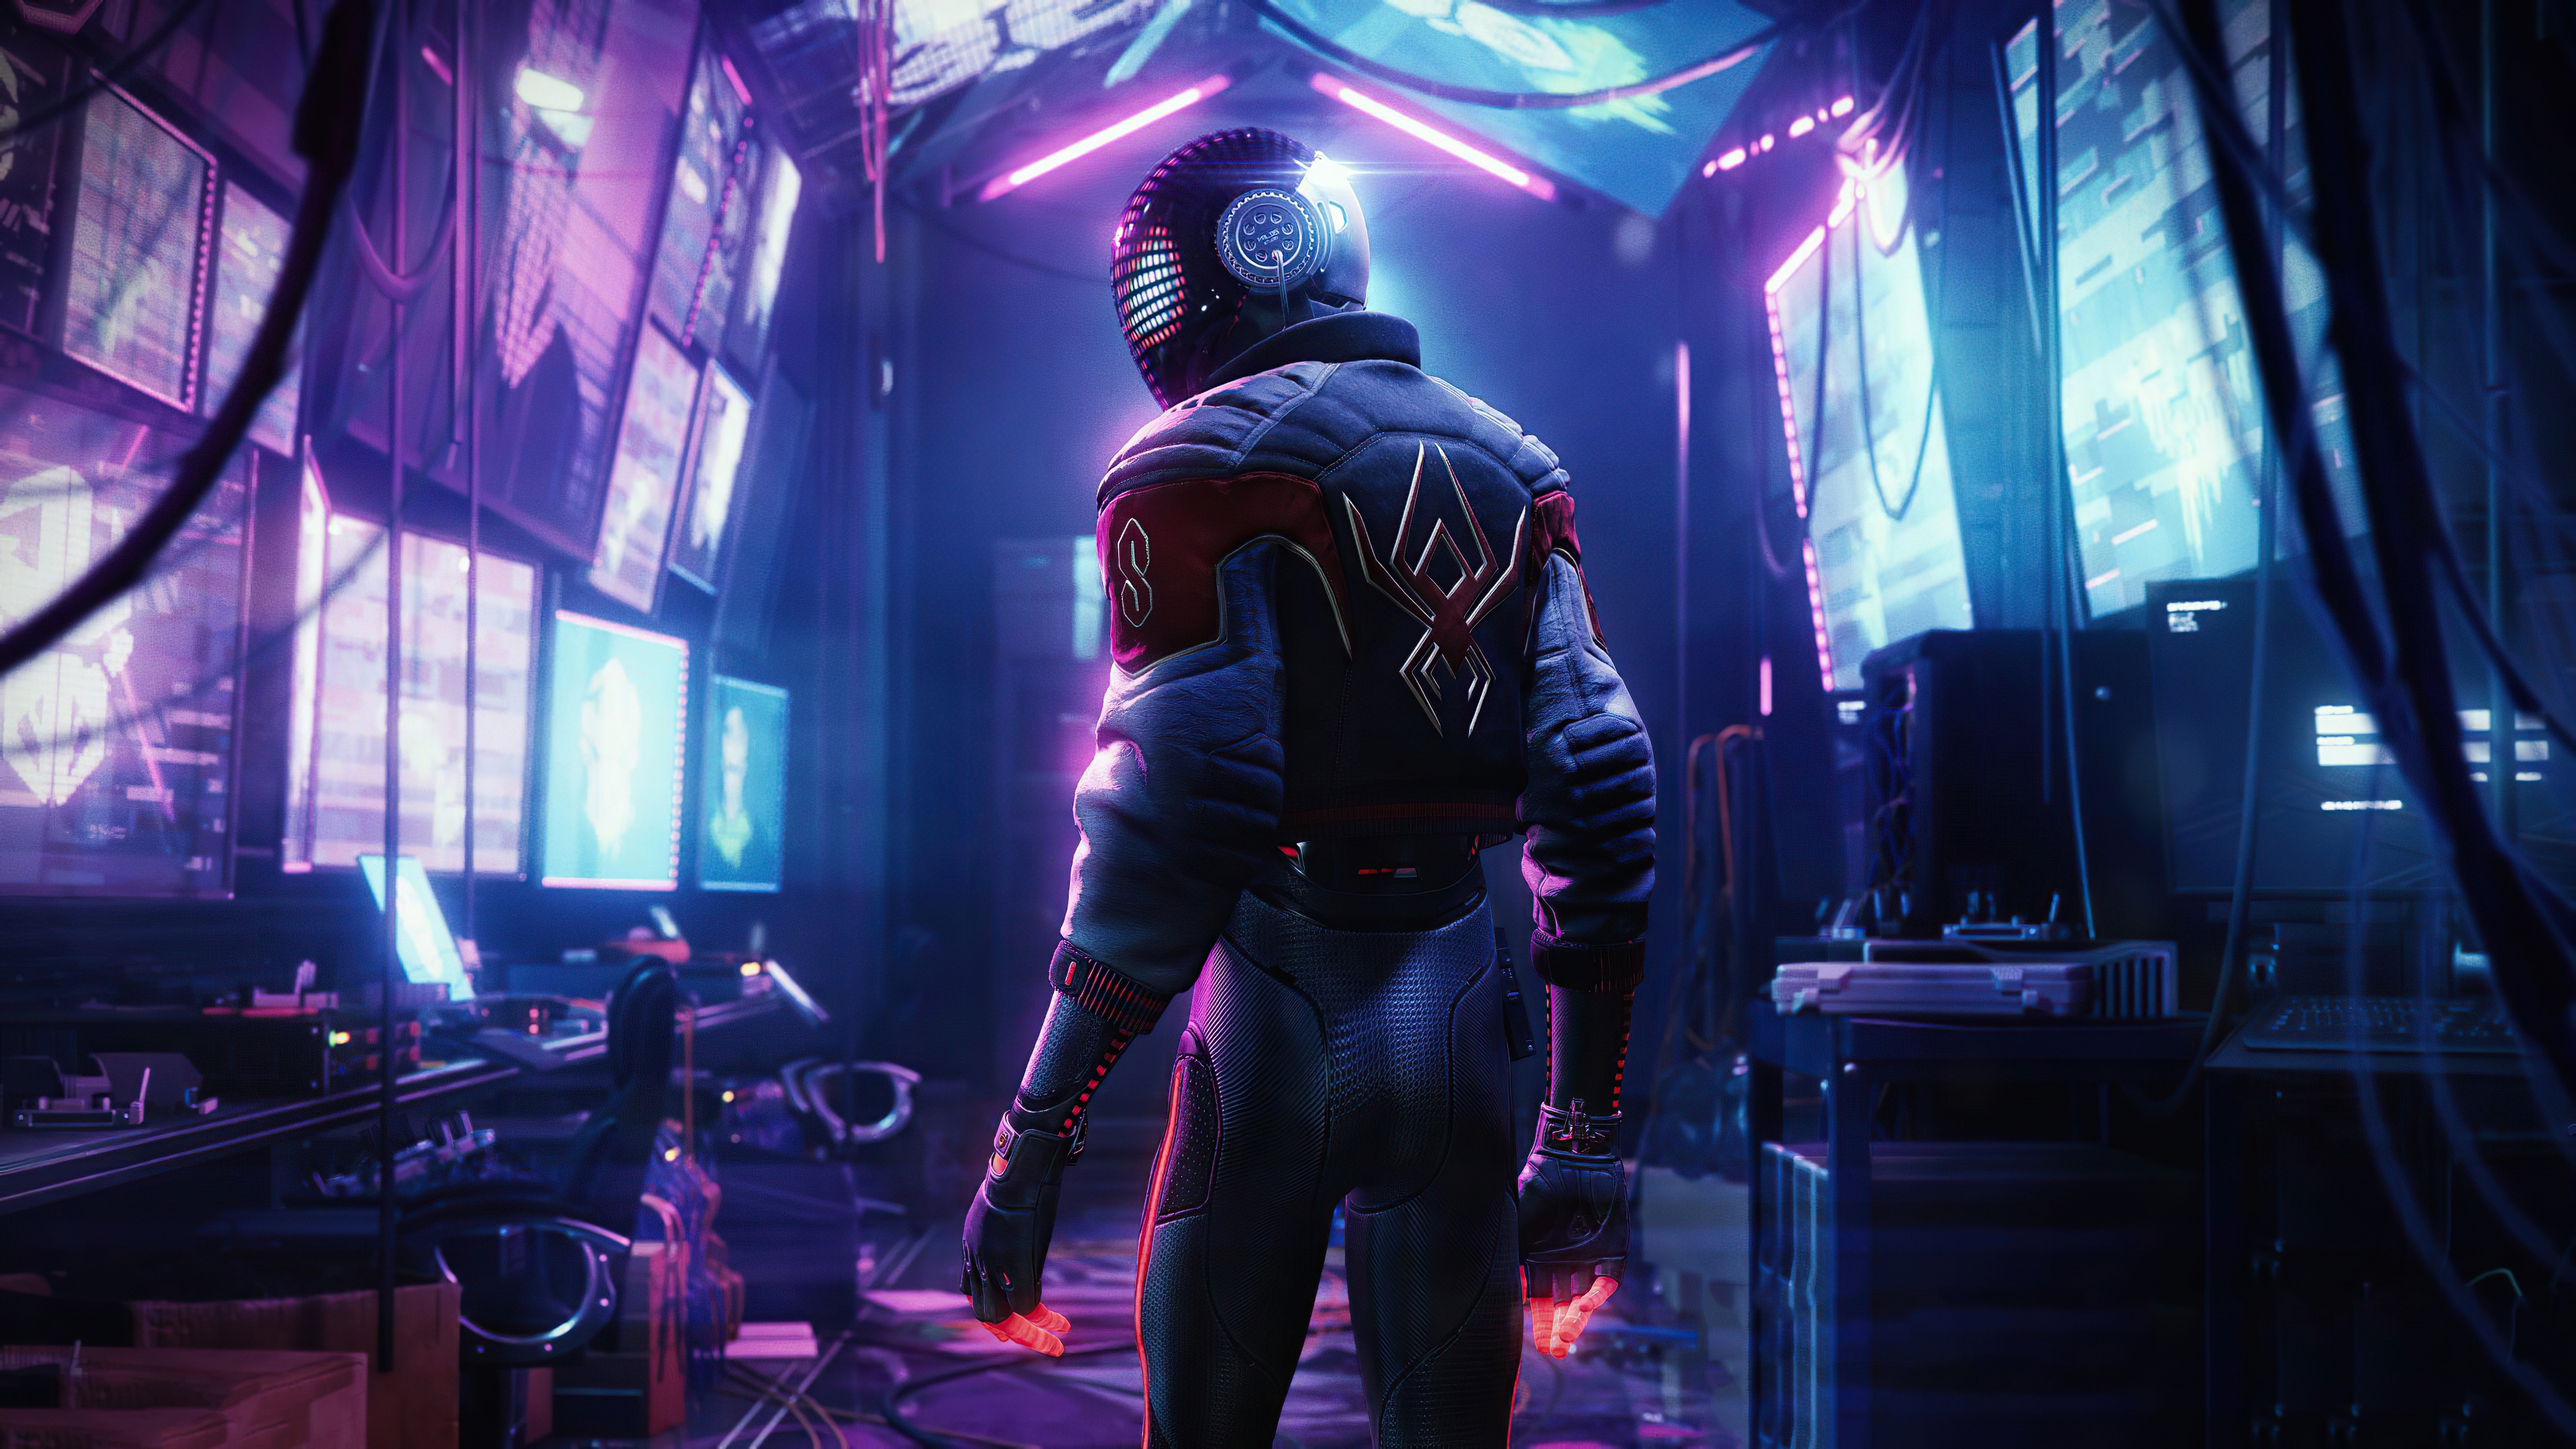 HD wallpaper, 2020 Games, Cyberpunk, Spiderman, Neon, Playstation 5